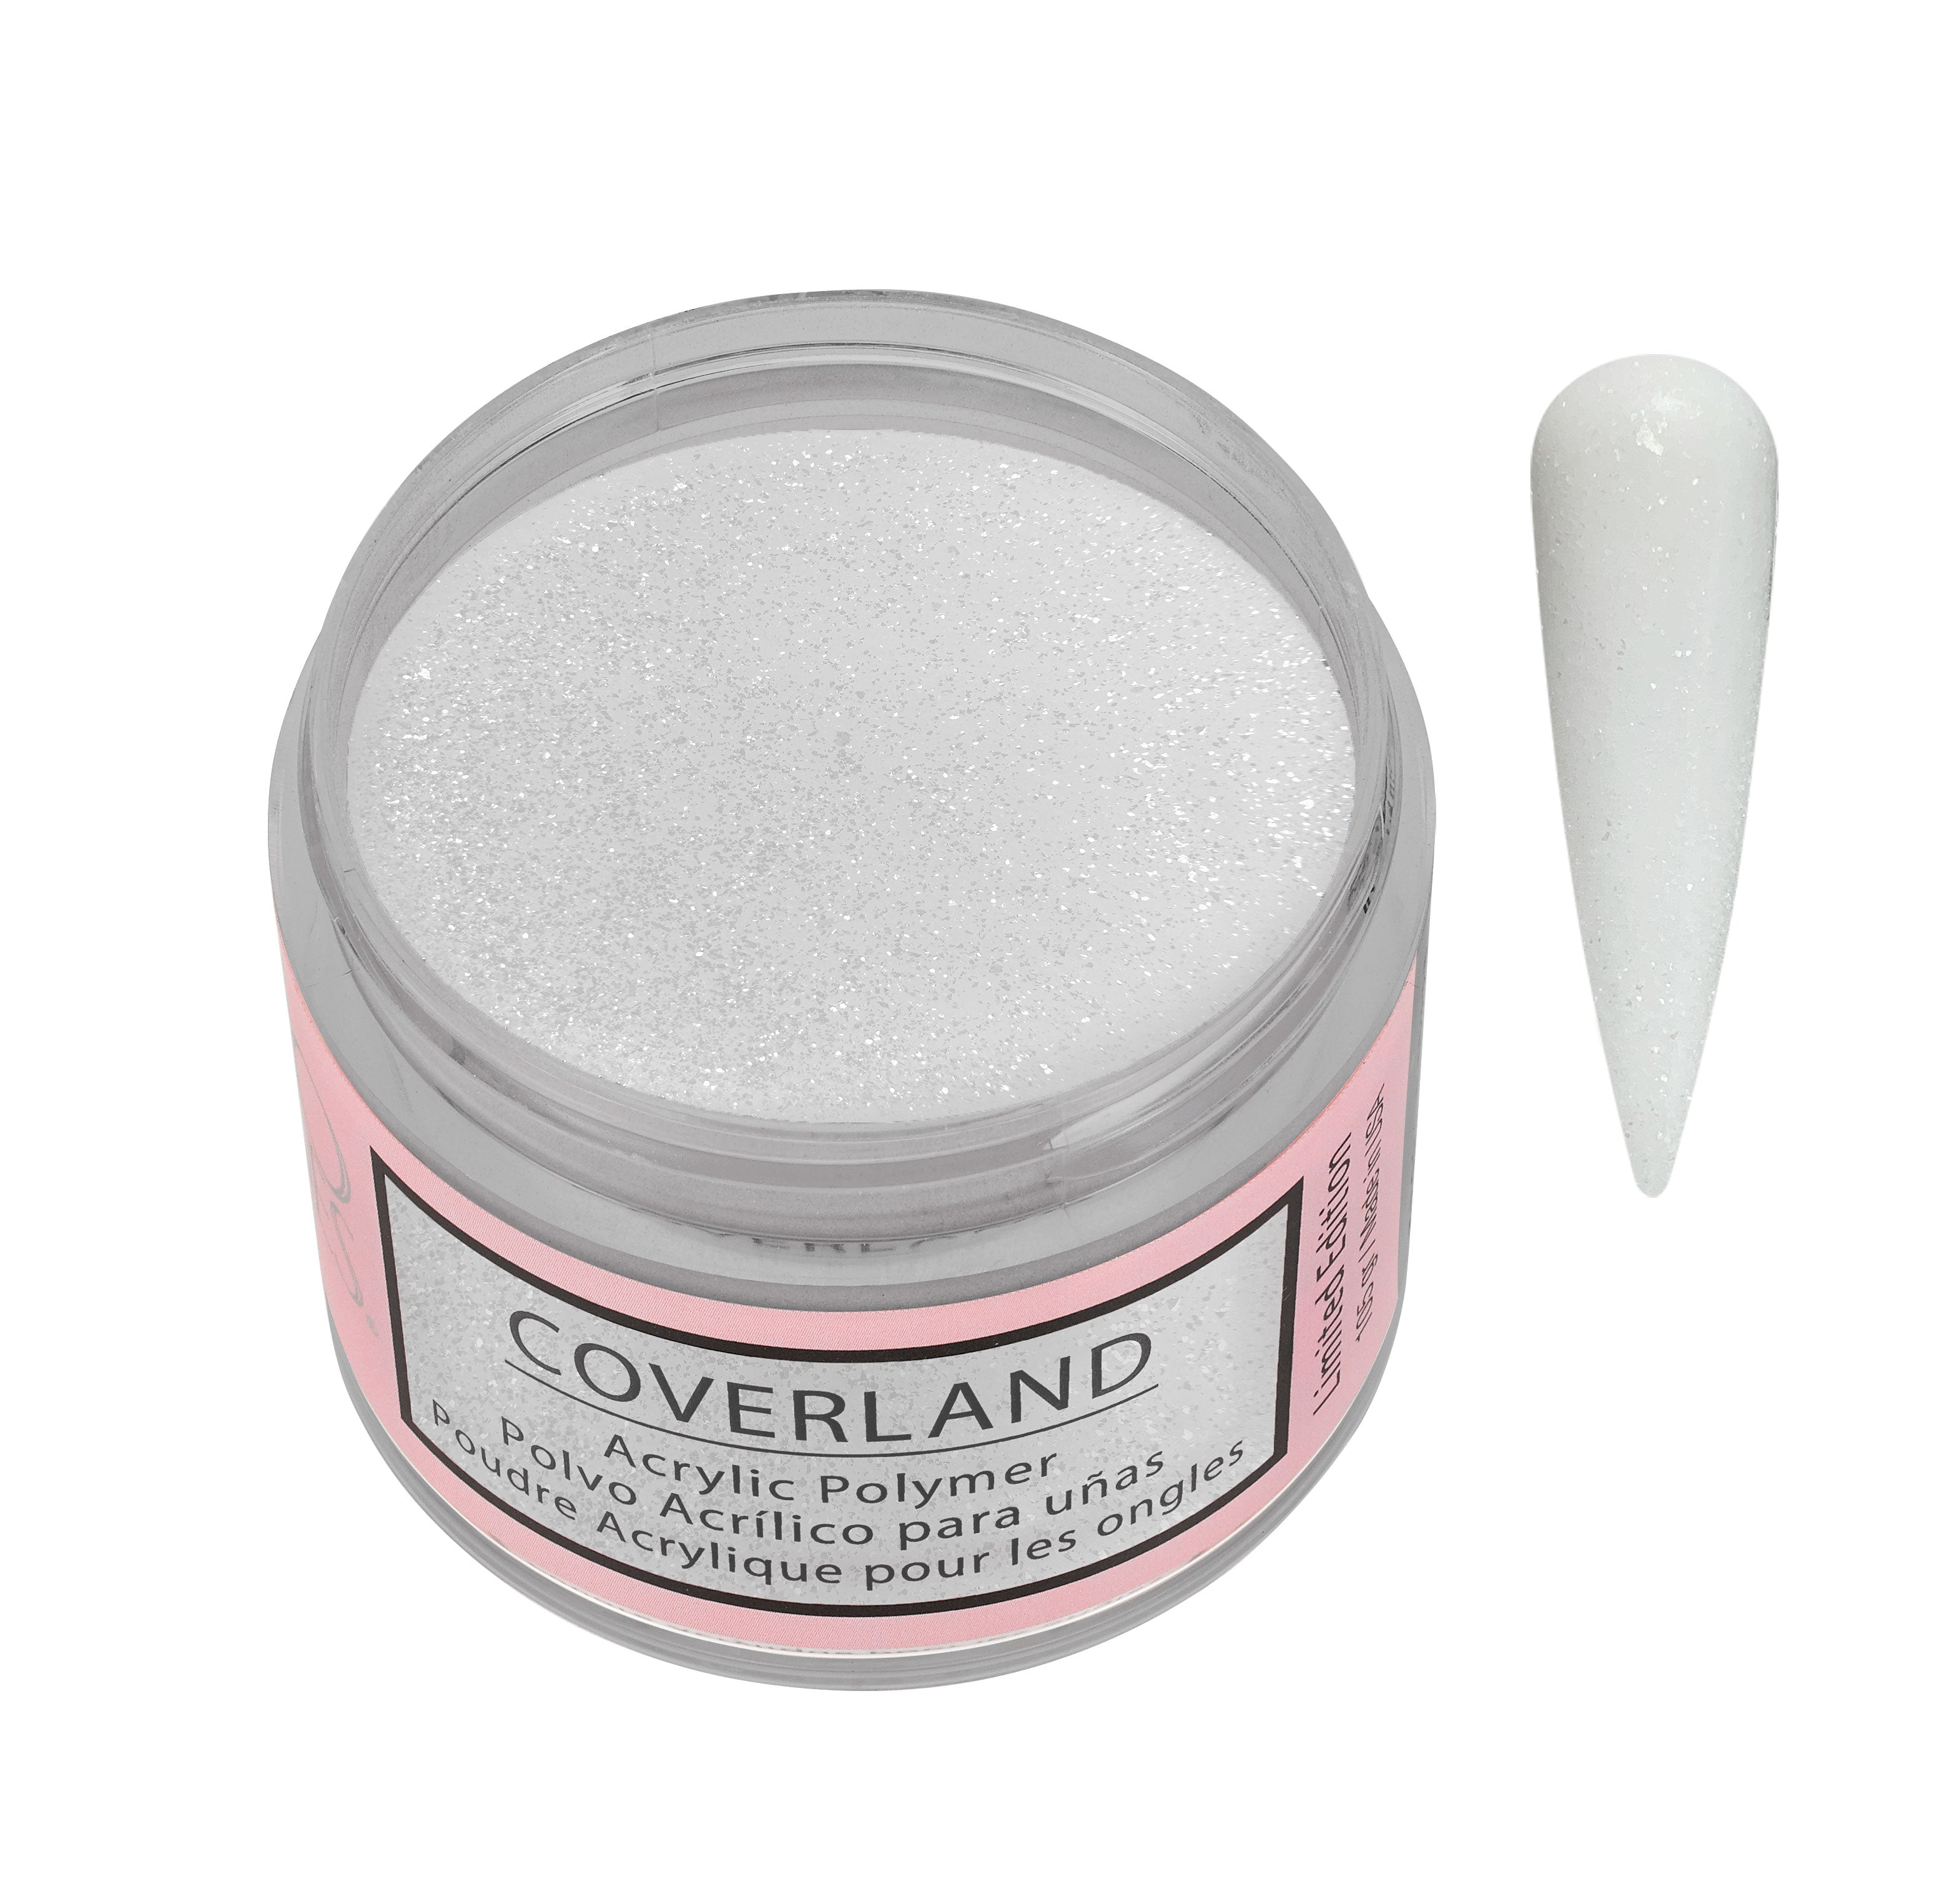 Coverland Acrylic Powder 3.5oz 